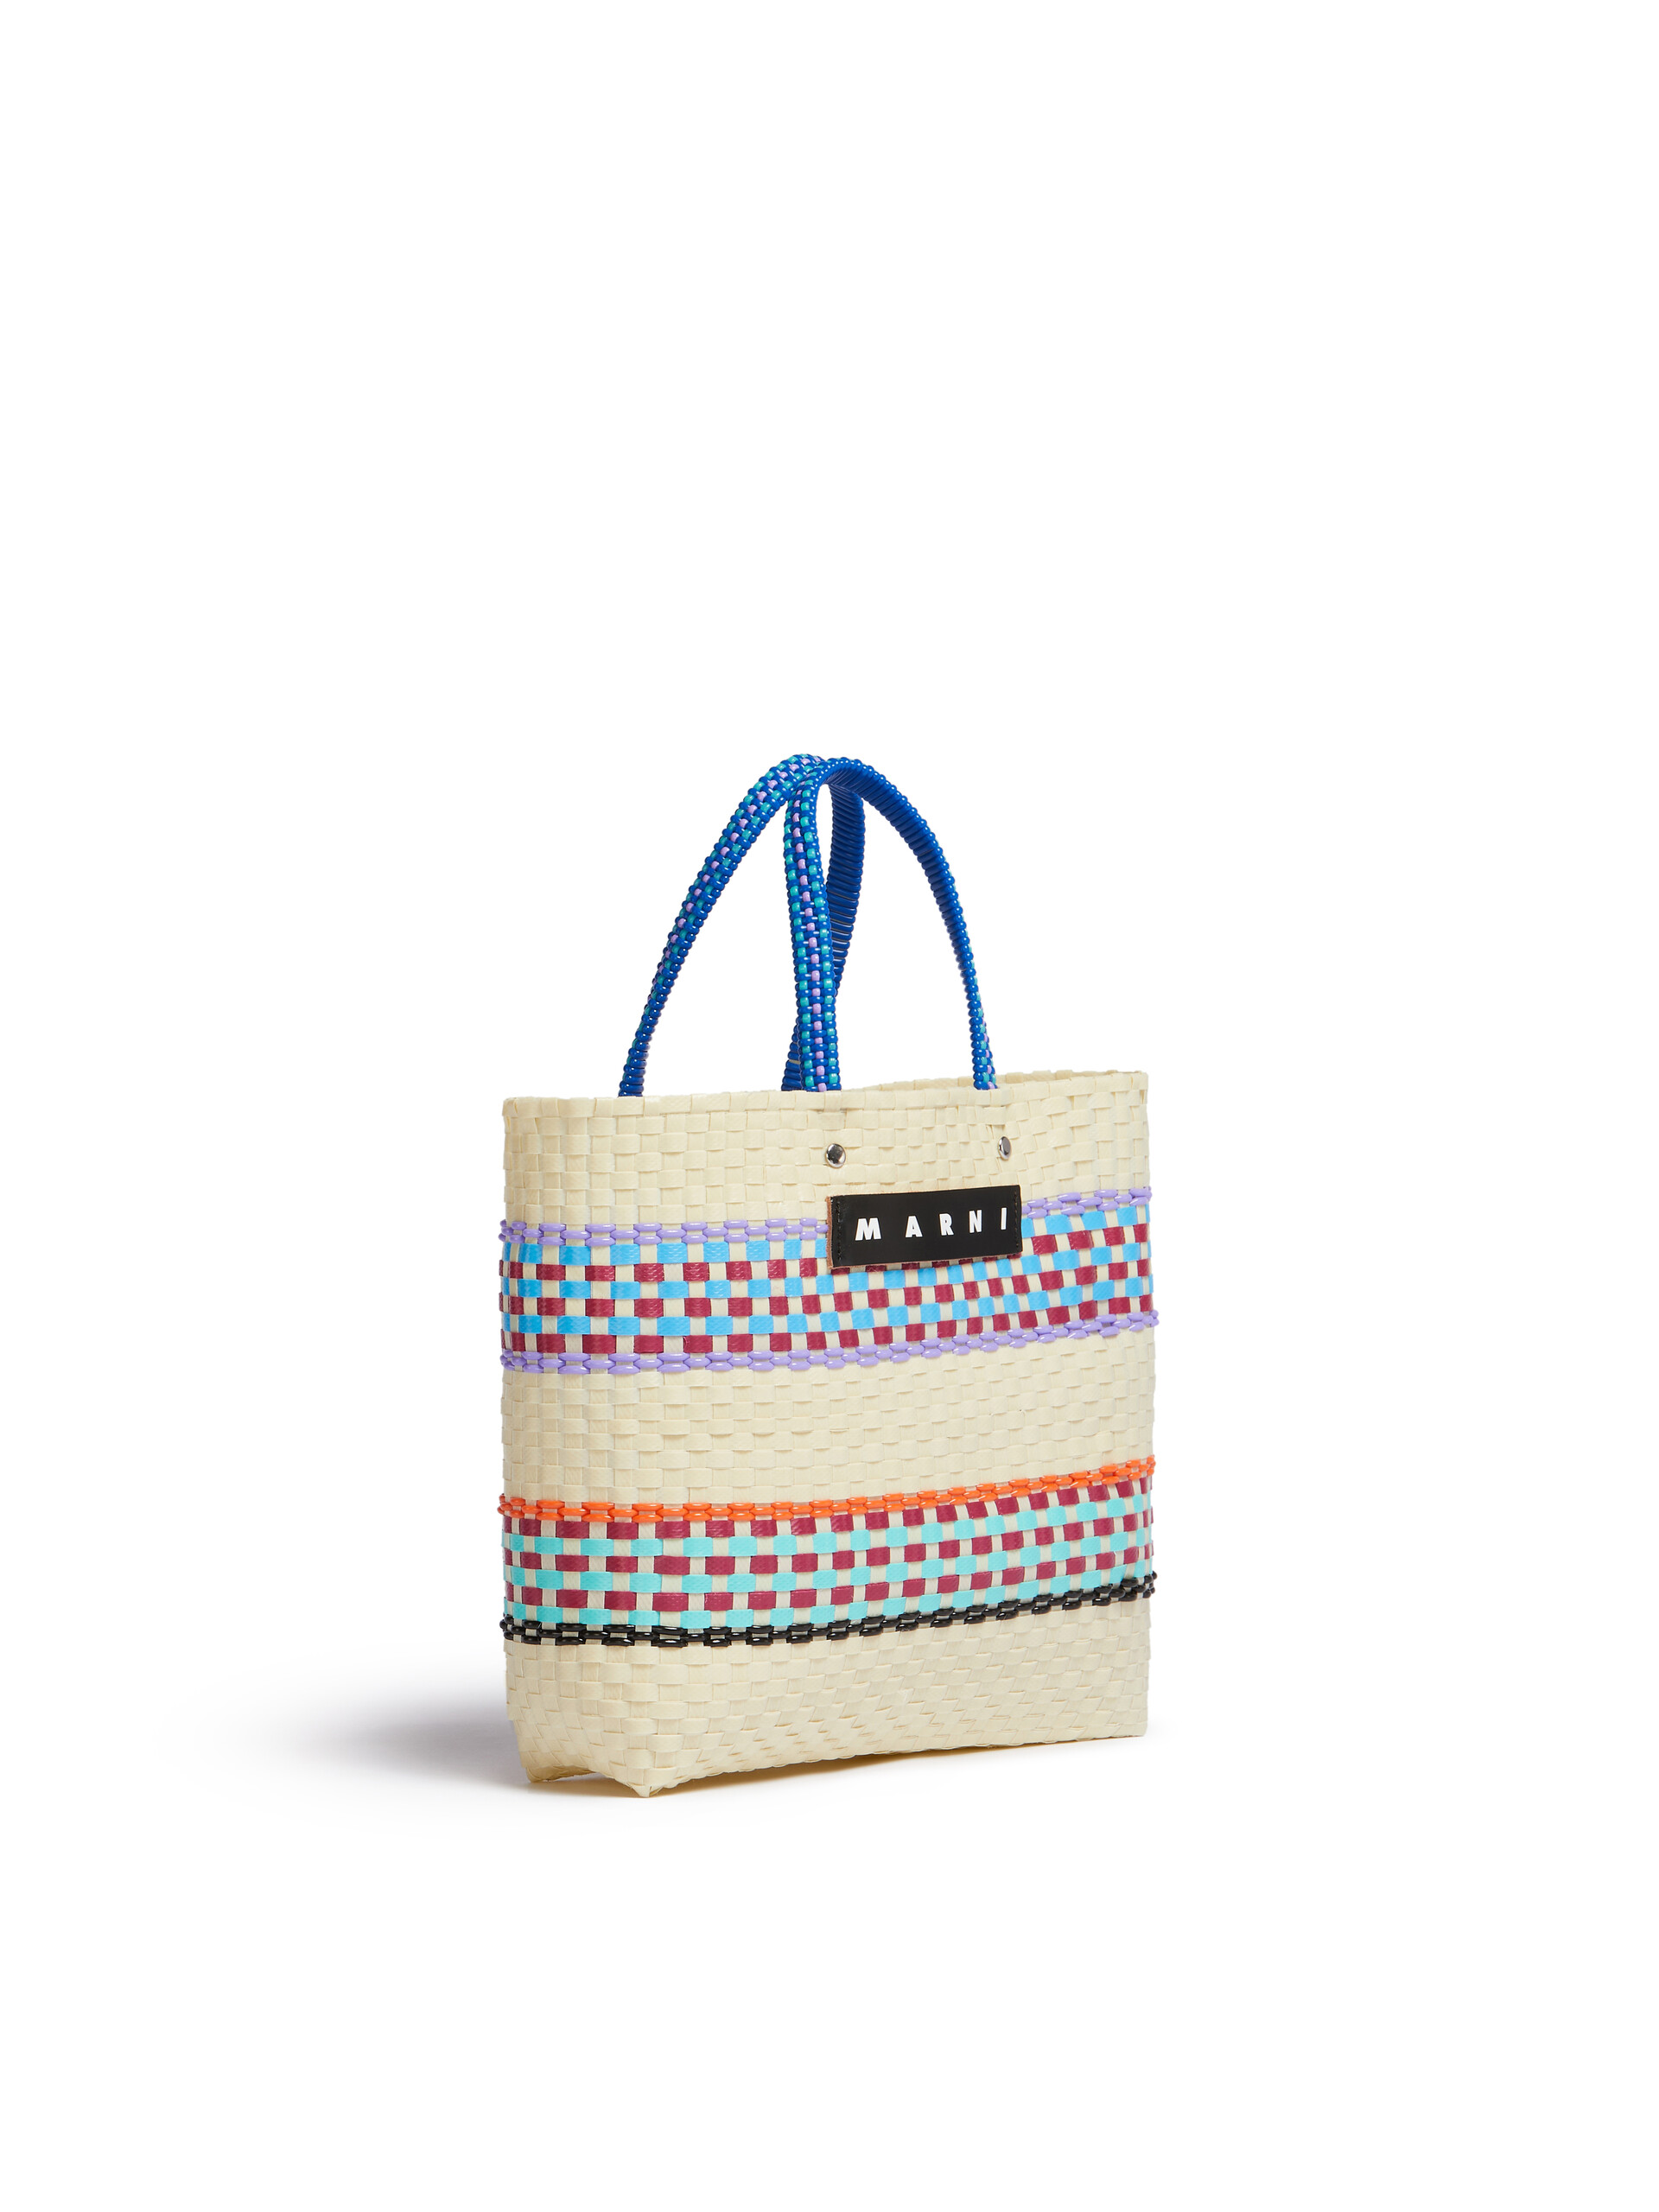 Cream MARNI MARKET RETRO BASKET bag - Shopping Bags - Image 2